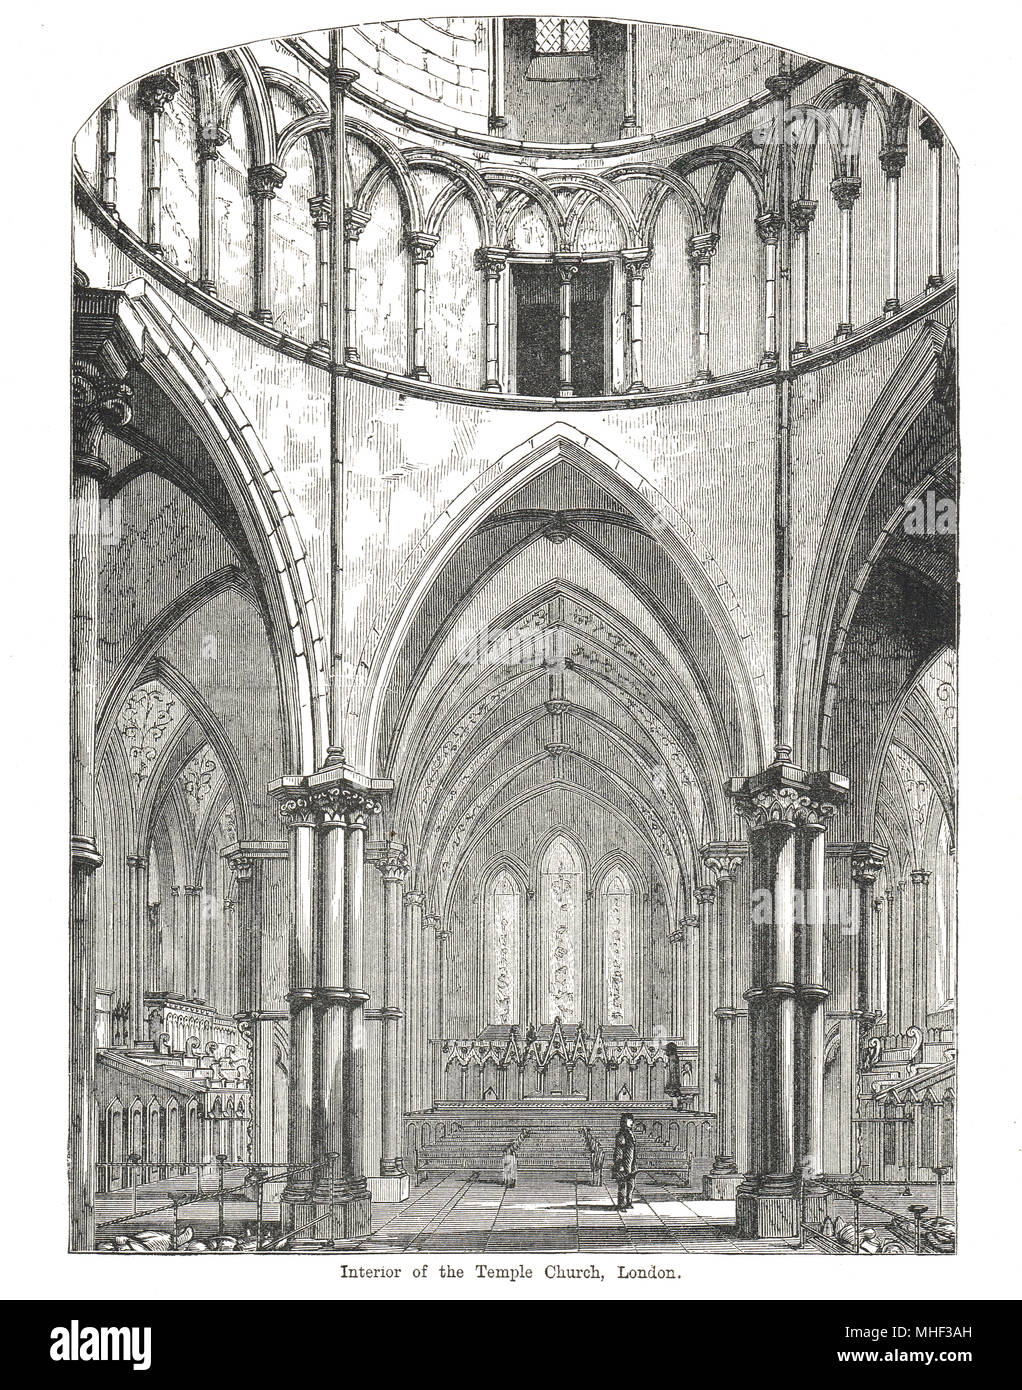 Innenraum der Temple Church in London, England. Abbildung 19. Stockfoto